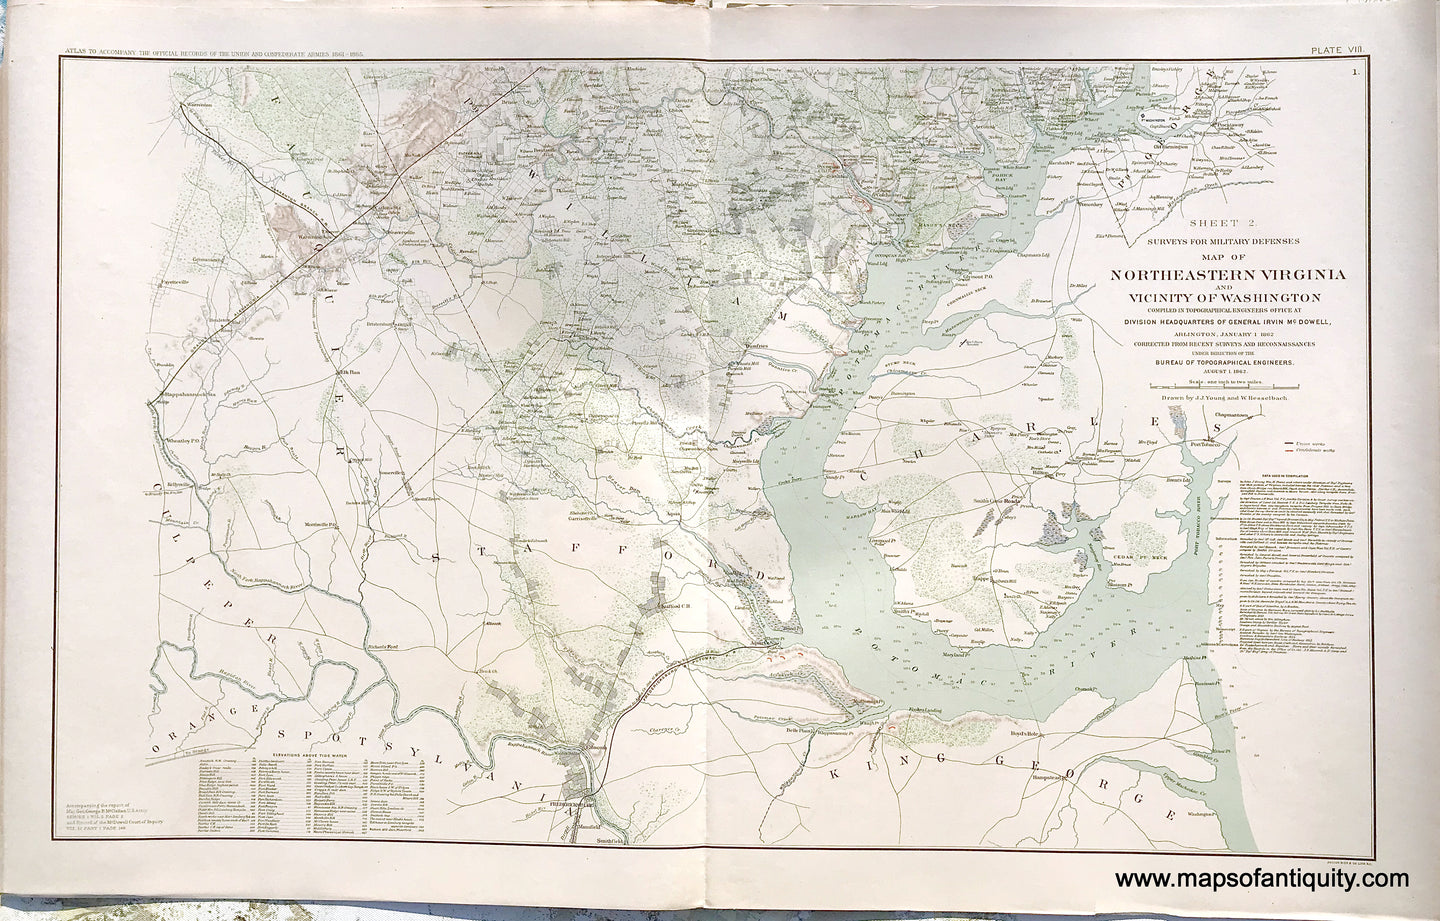 Antique-Lithograph-Print-Plate-8.-Northeast-Virginia-and-Vicinity-of-Washington.-Sheet-2.-1891-US-War-Dept.-Civil-War-Civil-War-1800s-19th-century-Maps-of-Antiquity